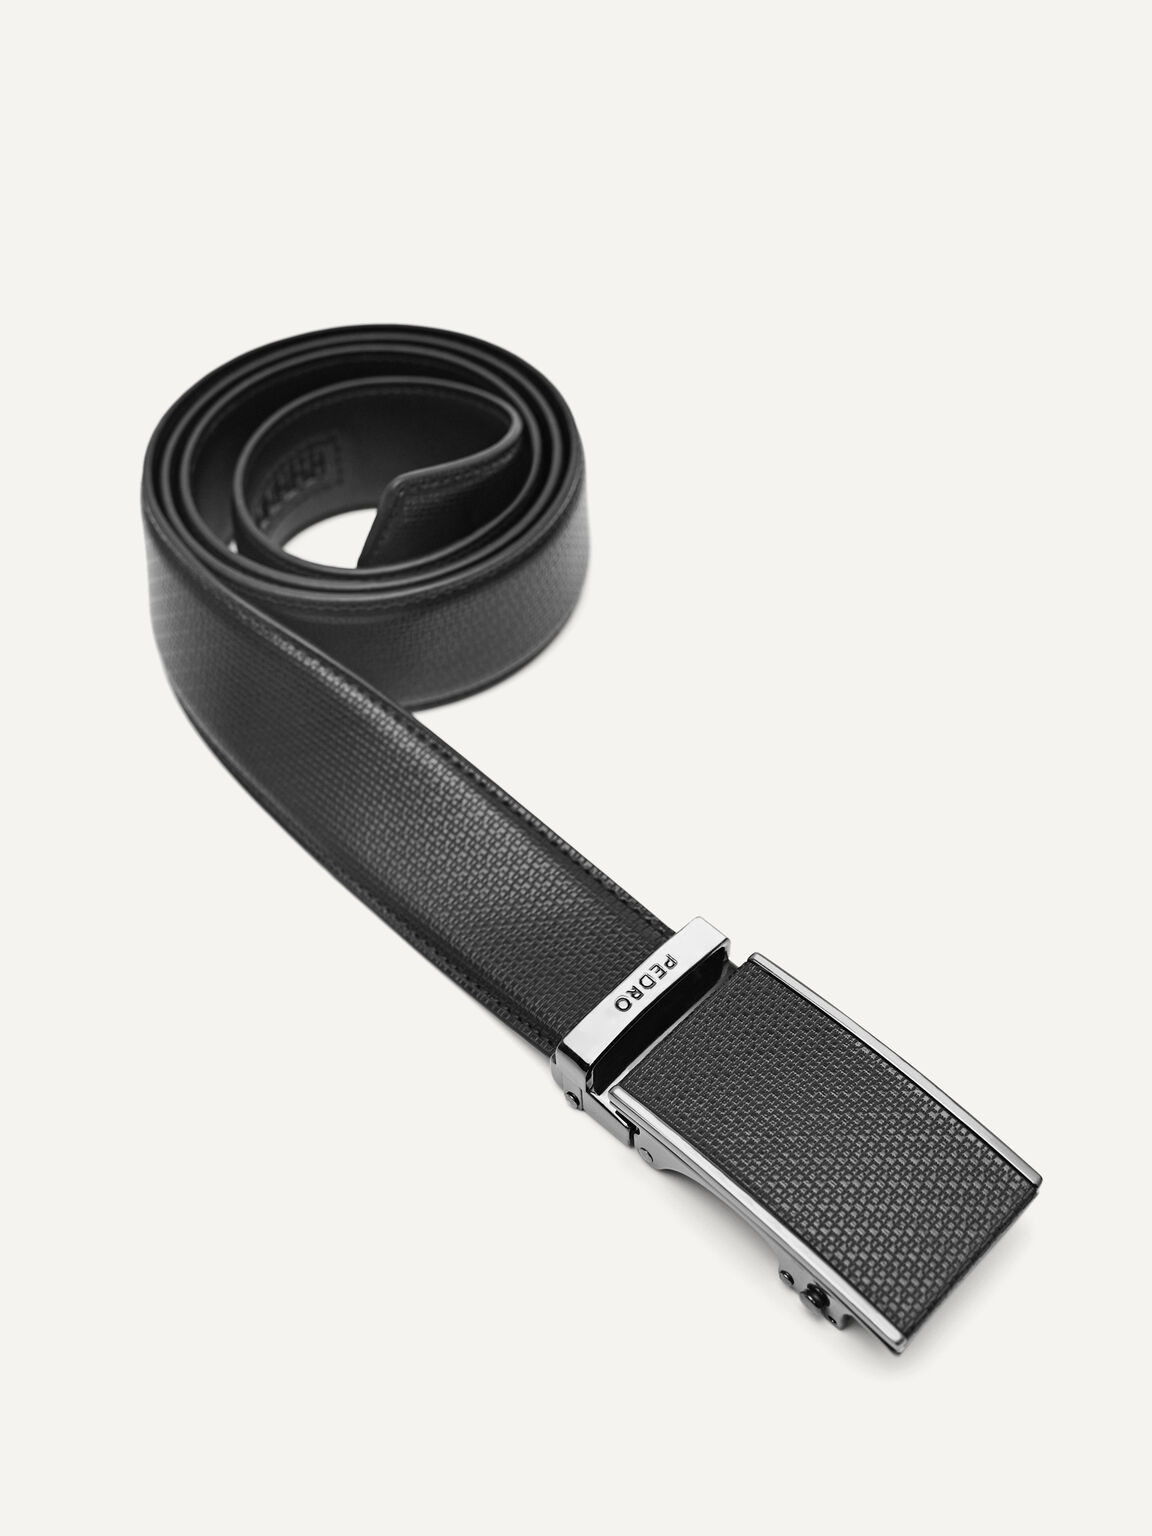 Embossed Leather Automatic Belt, Black